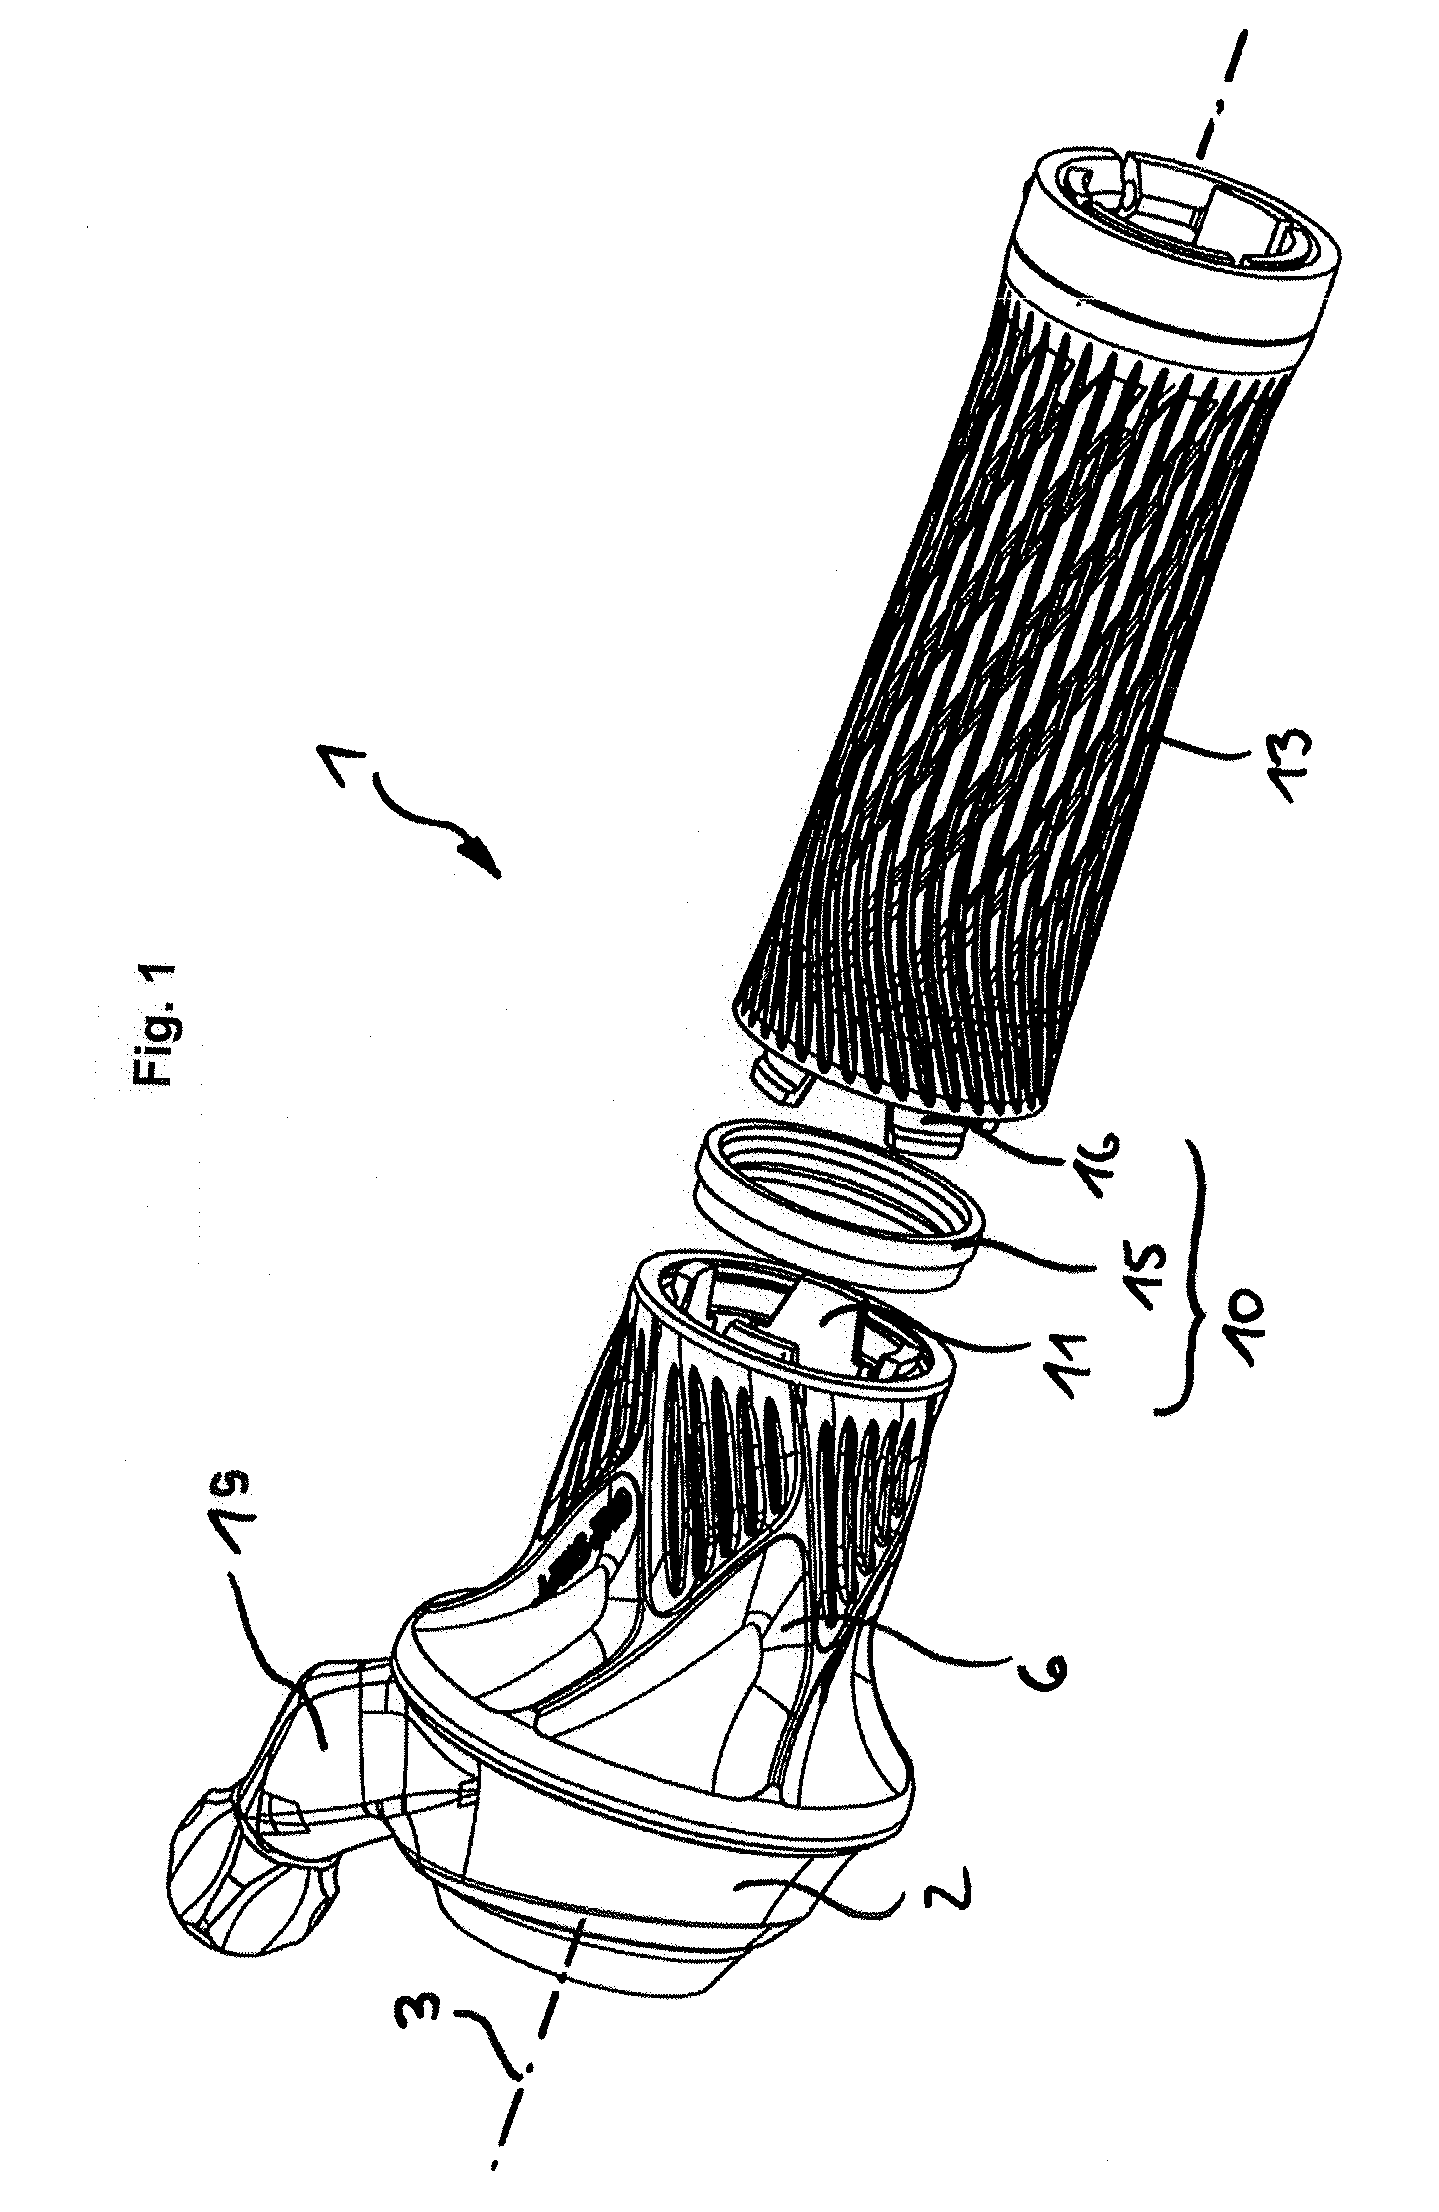 Rotatable grip actuator